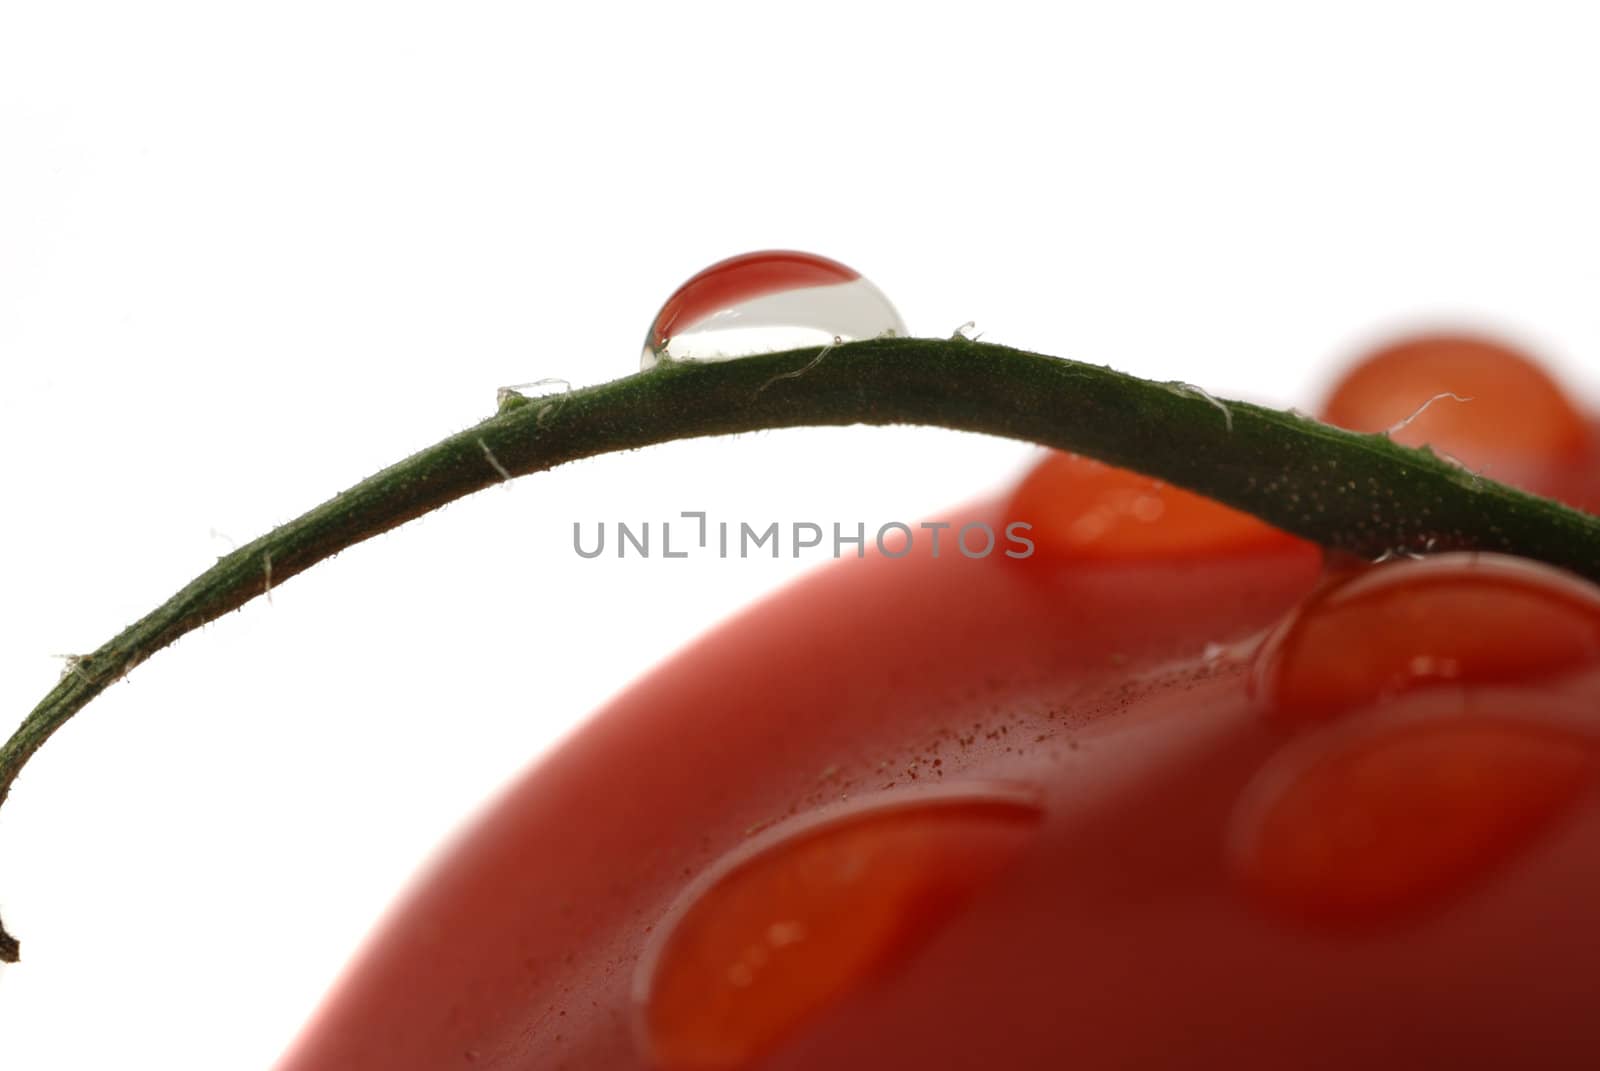 Tomato and drop macro photo by galdzer